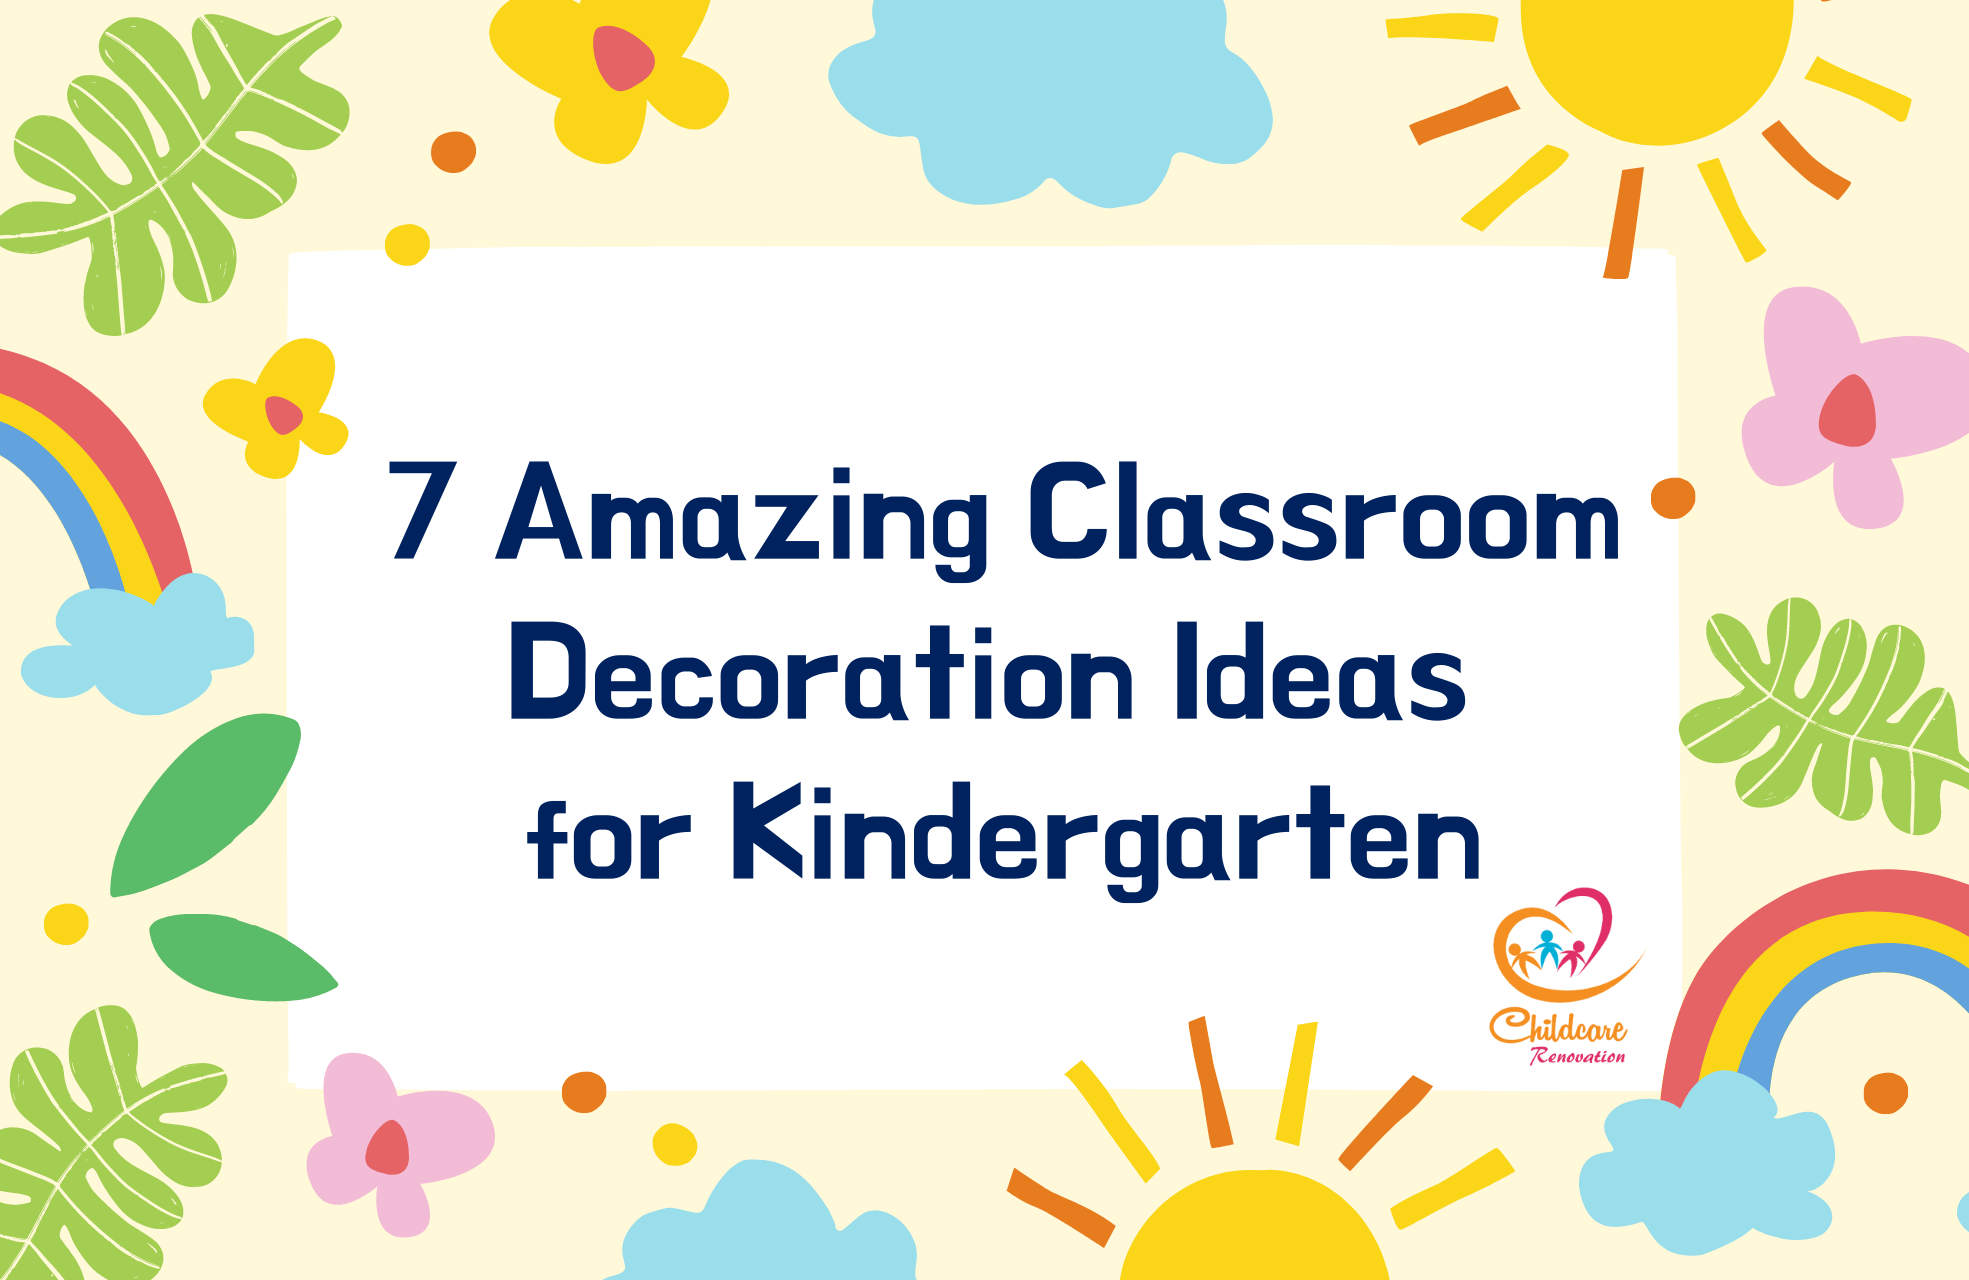 7 Amazing Classroom Decoration Ideas for Kindergarten